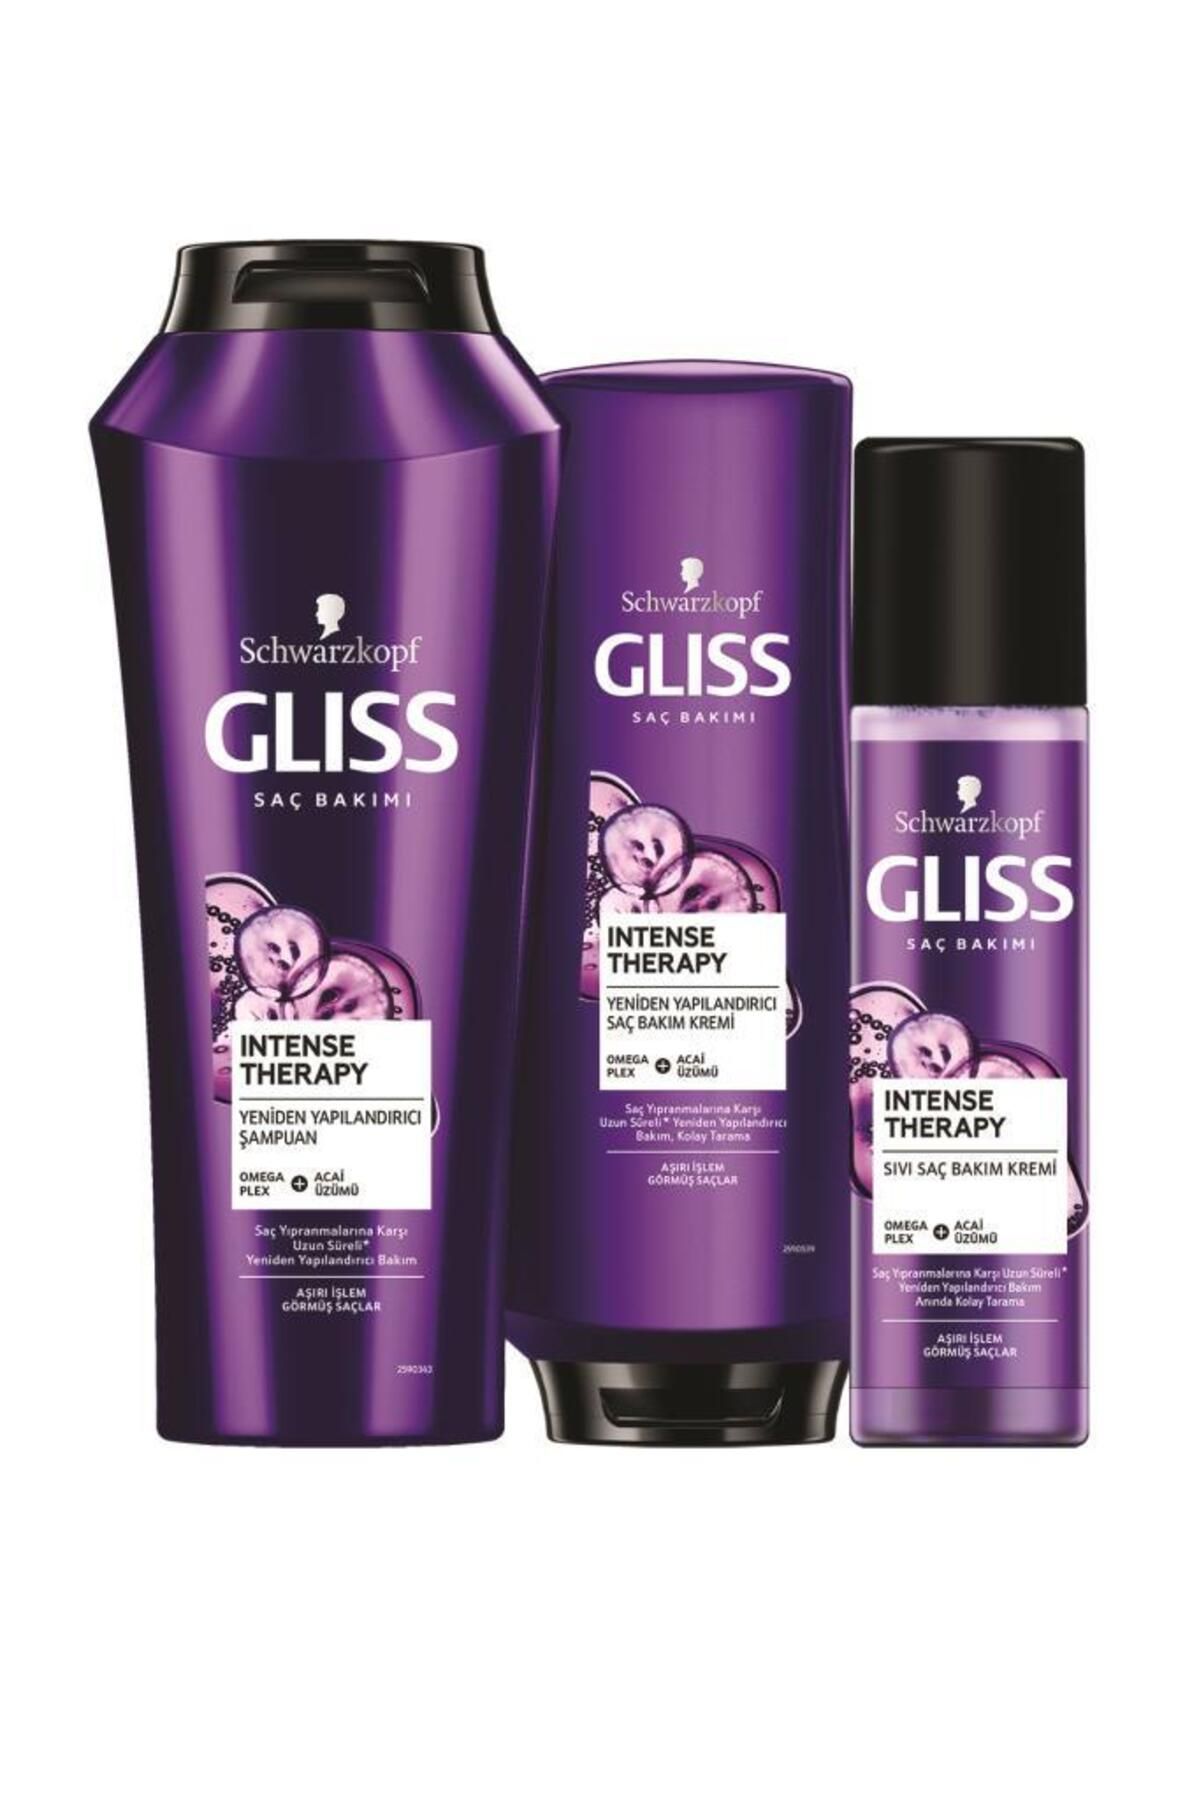 Gliss شامپو تراپی مو با اثرات تقویت کننده و ترمیم کننده